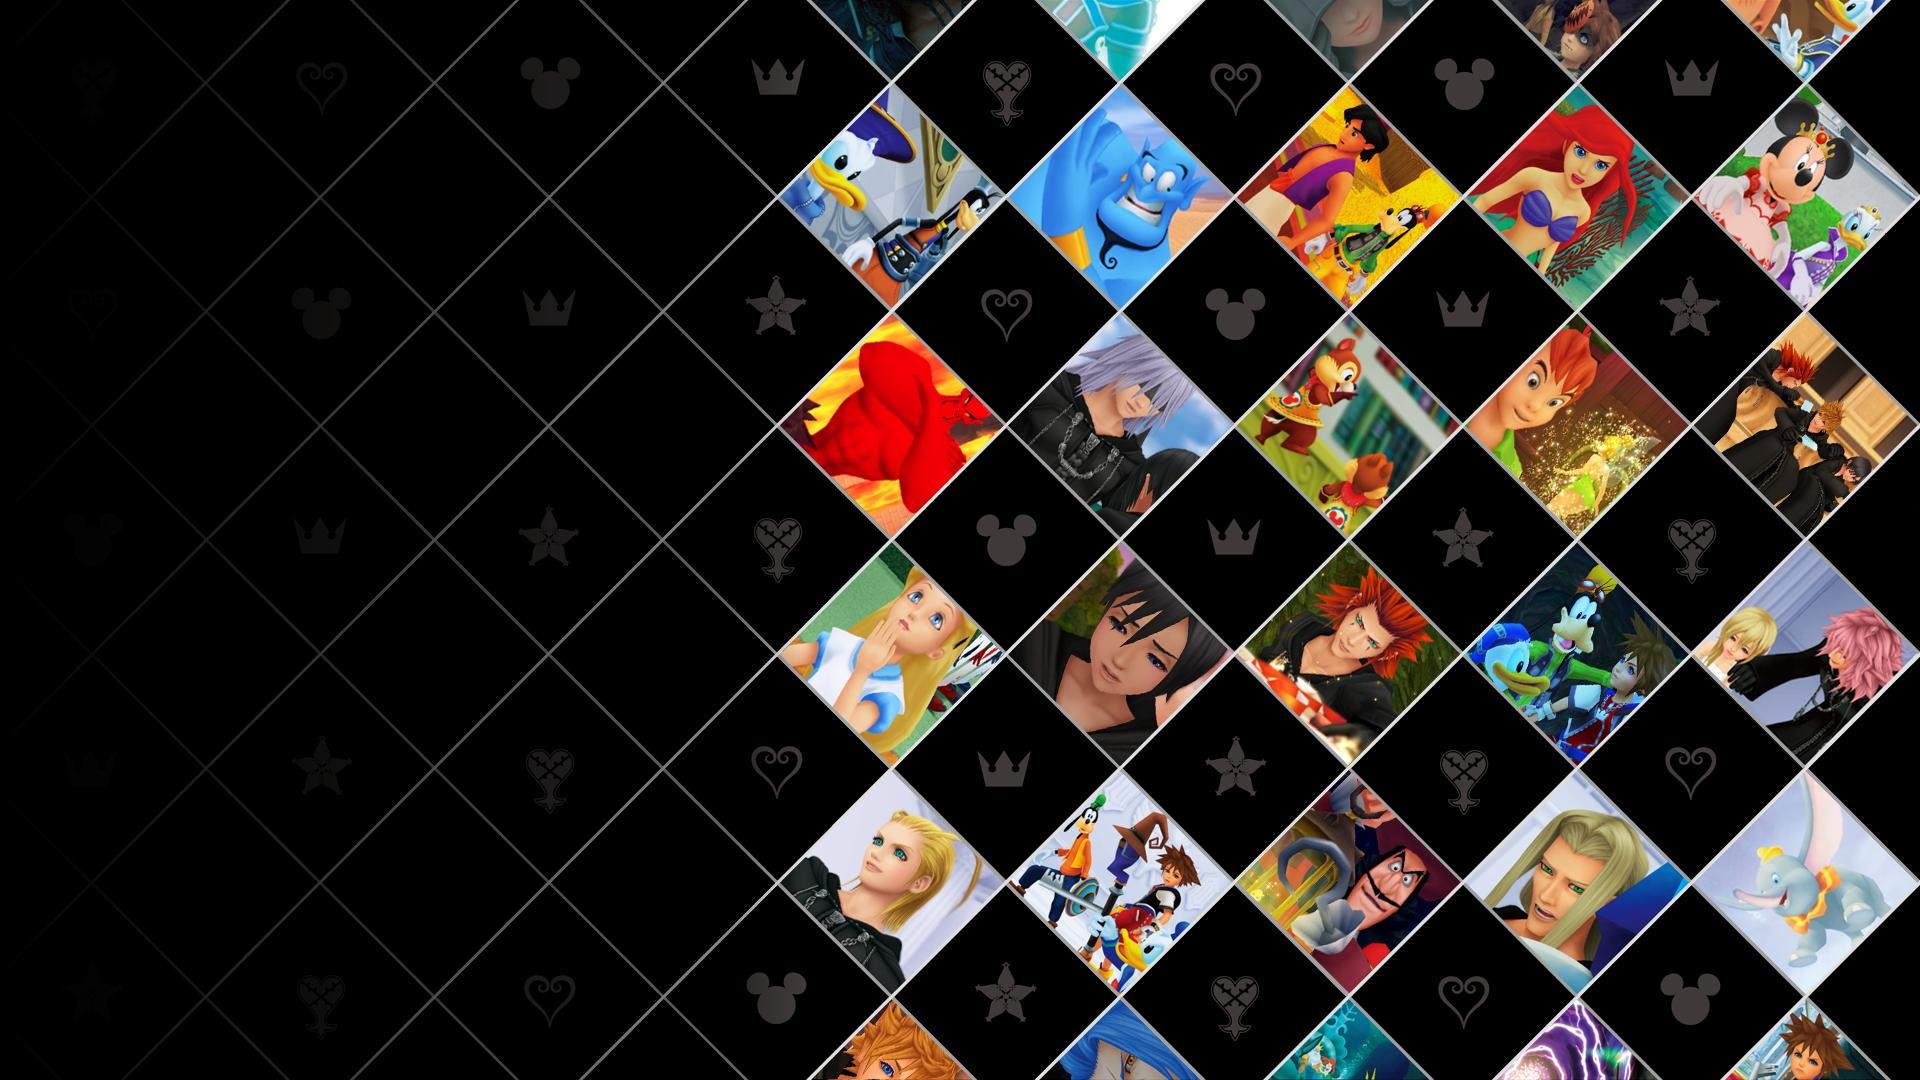 1920x1080 Desktop Images of Kingdom Hearts: 16/05/2017 by Domenic Matter for desktop  and mobile